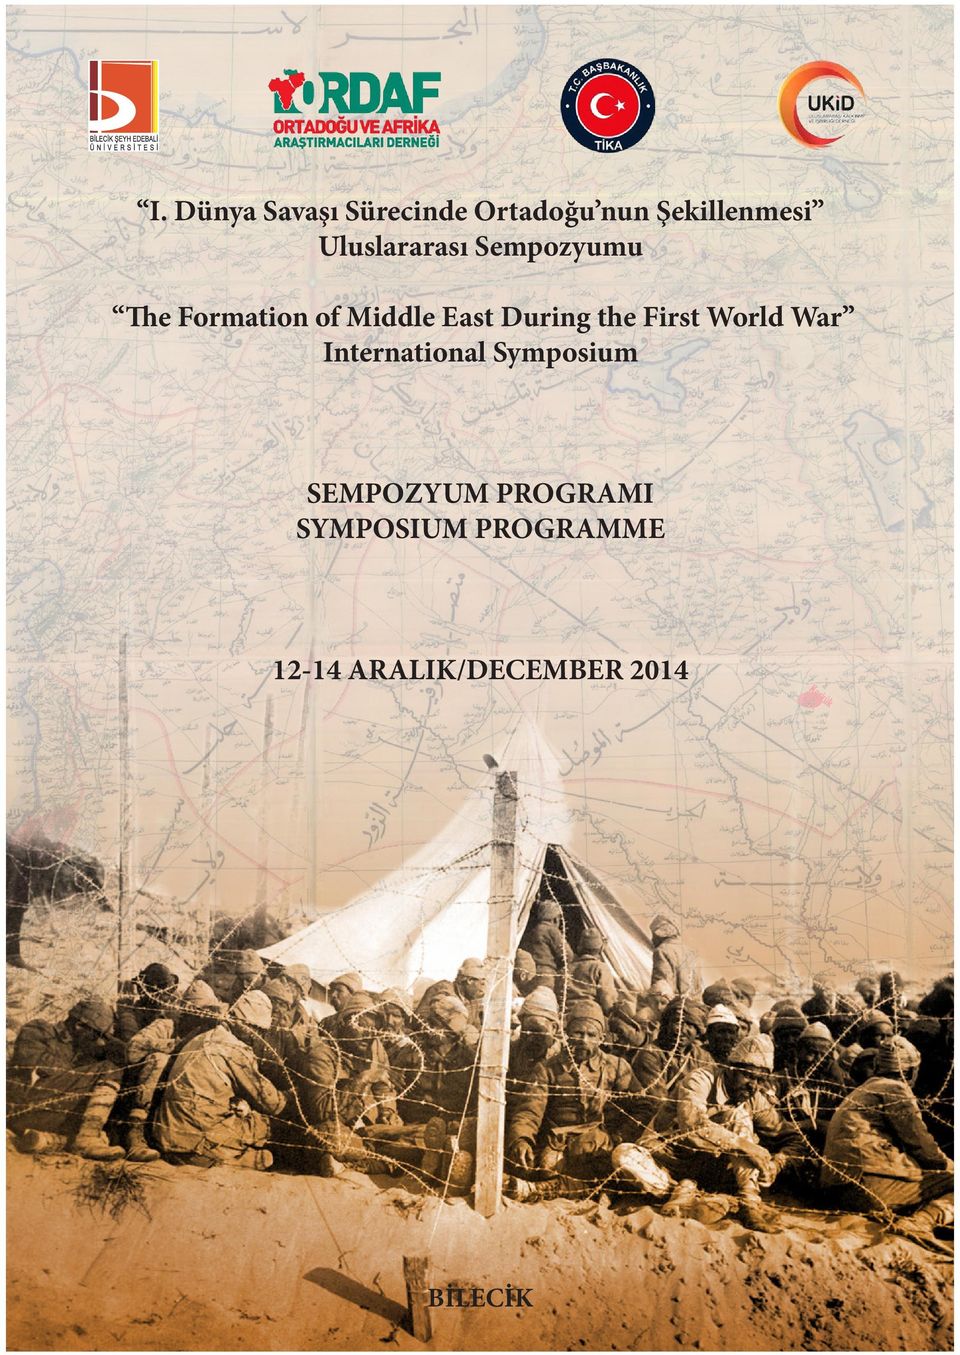 During the First World War International Symposium